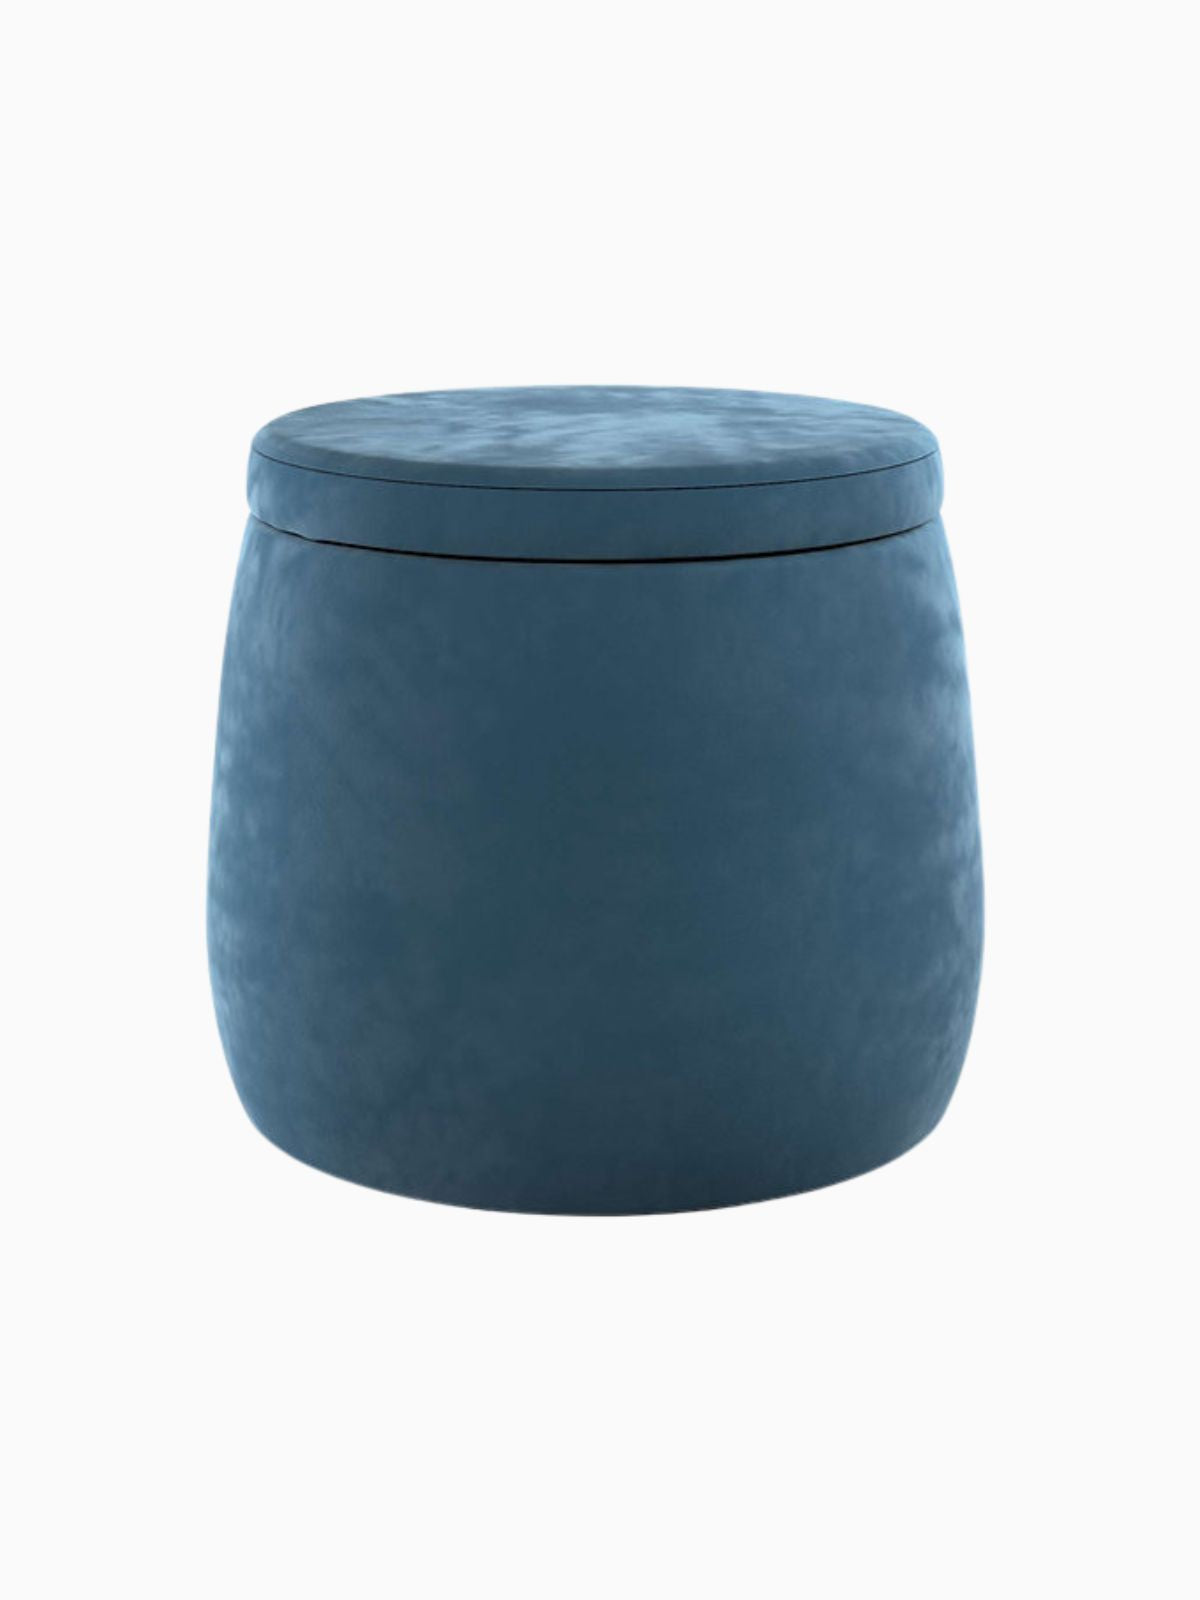 Pouf contenitore Candy Jar in velluto, colore blu scuro 40x40 cm.-1